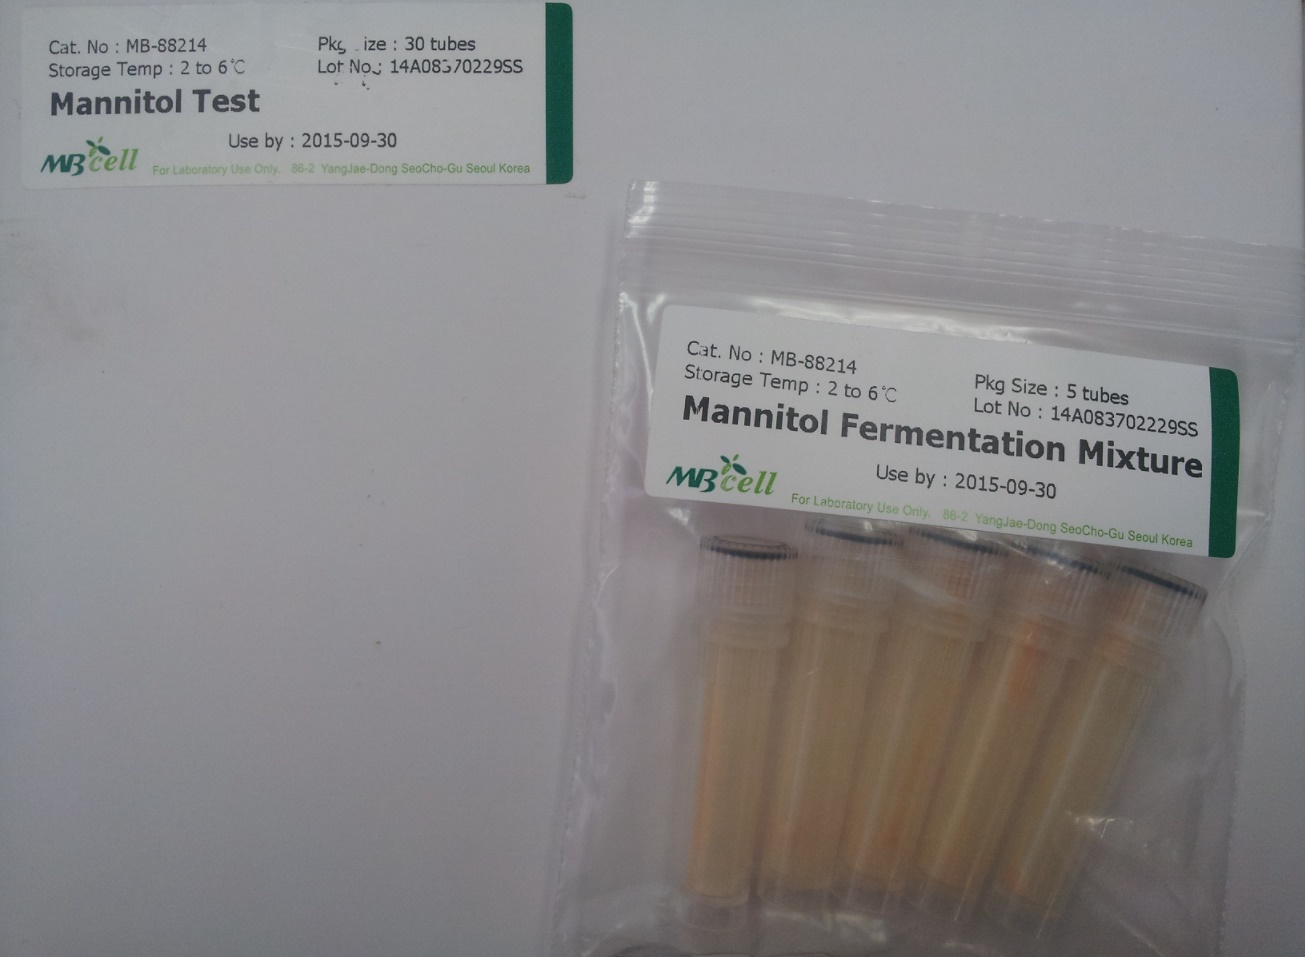 Listeria-mono test